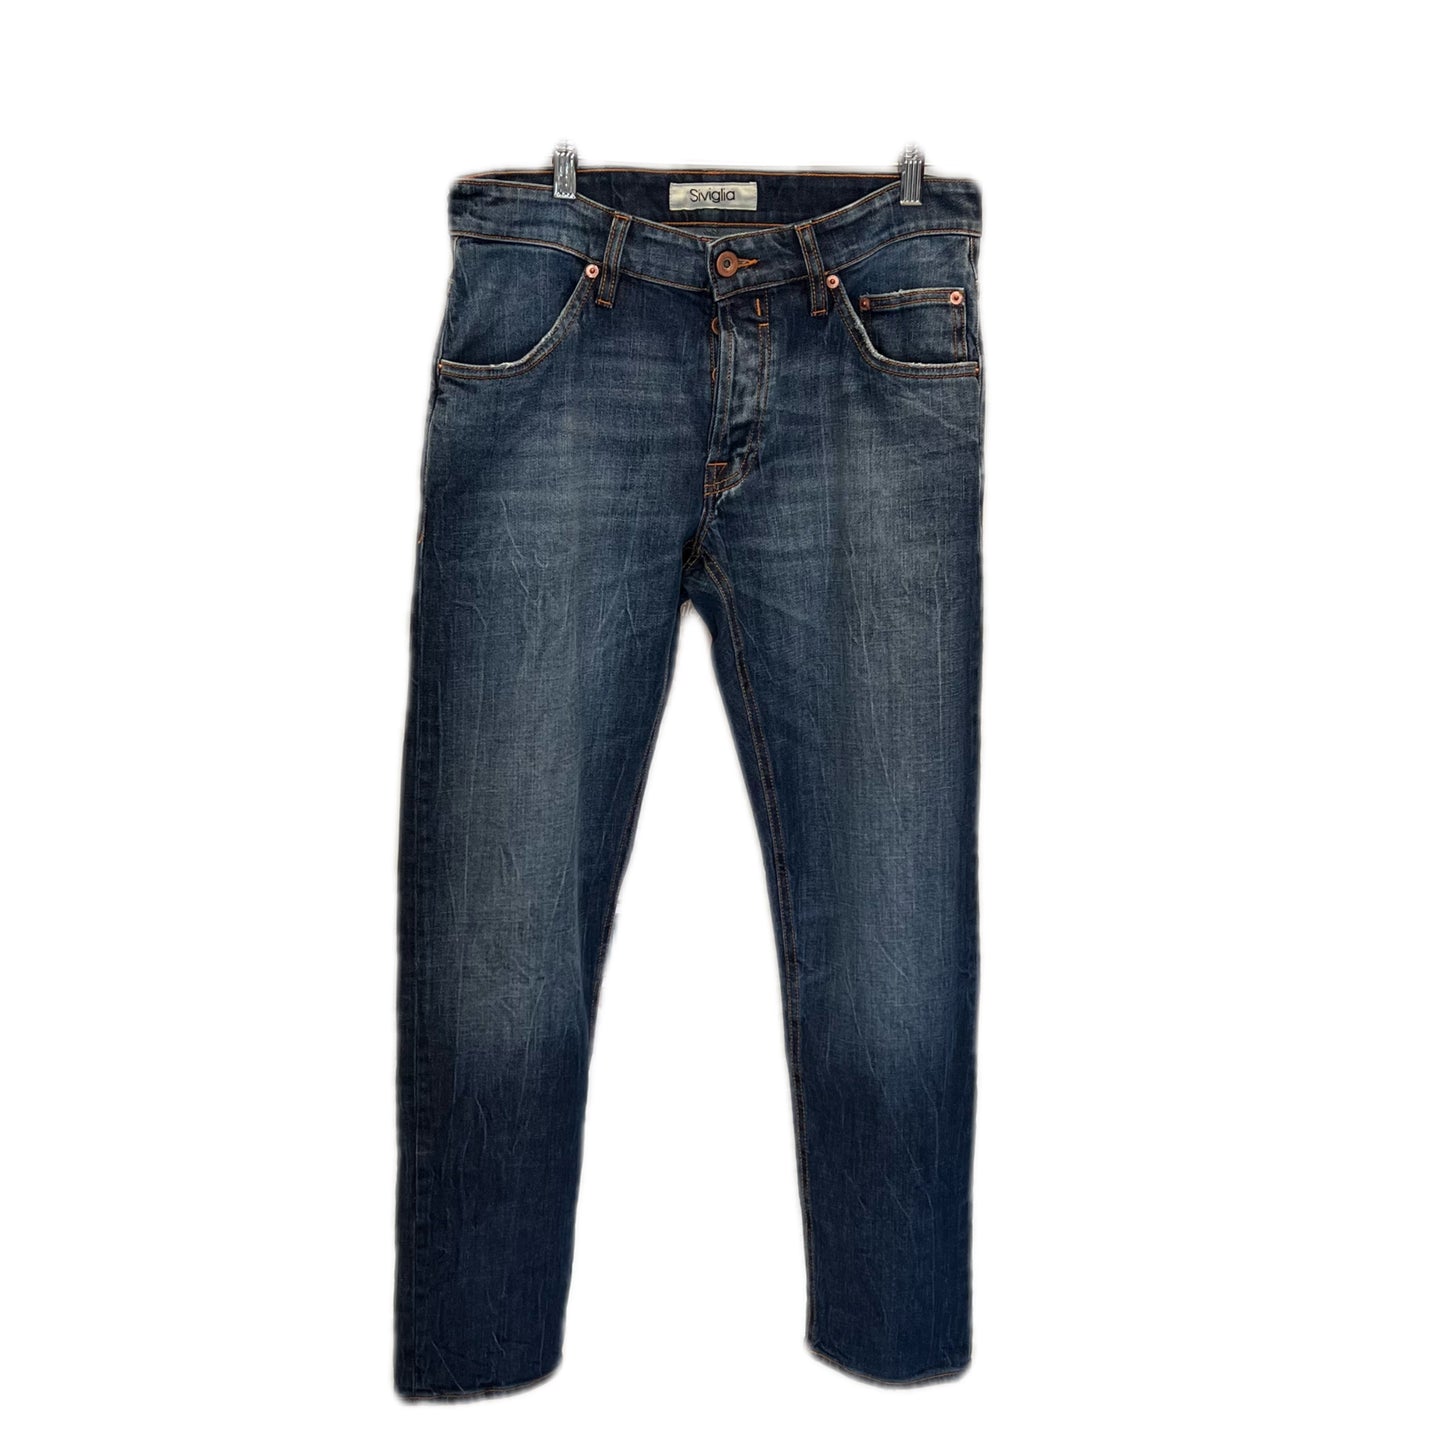 Siviglia - Jeans 5 Pockets Faded Fit Dark Navy